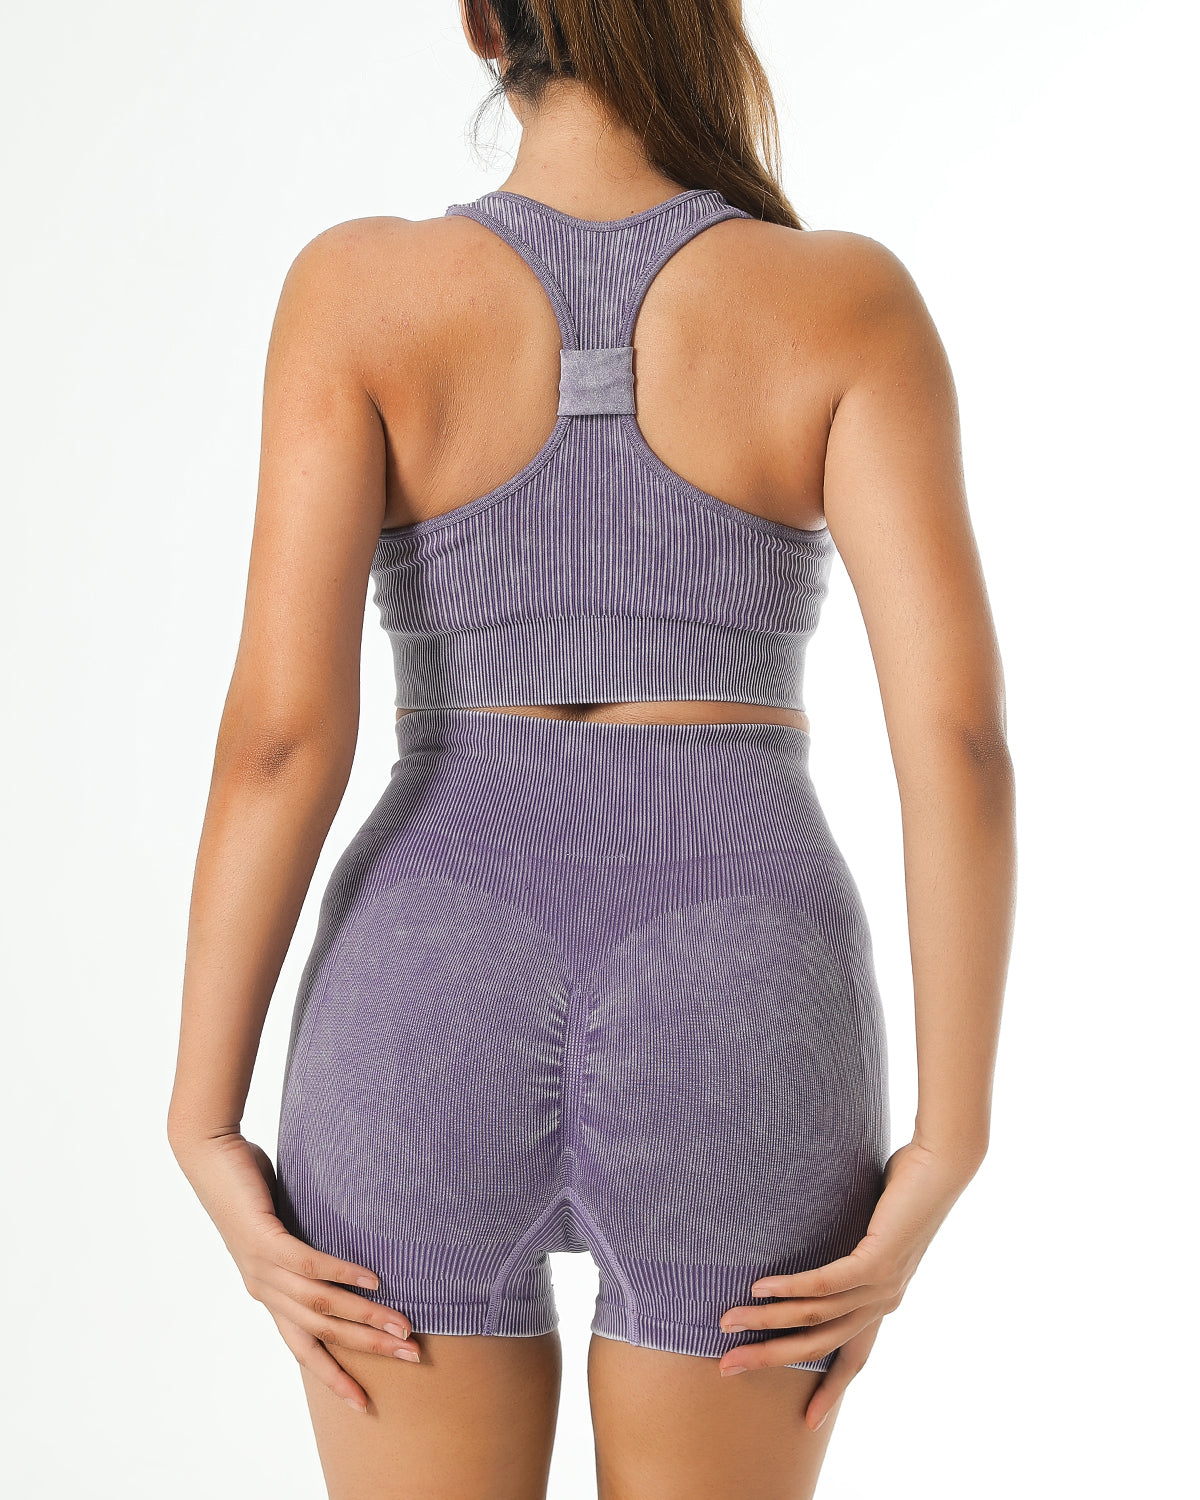 Isabella Seamless Scrunch Shorts - Purple